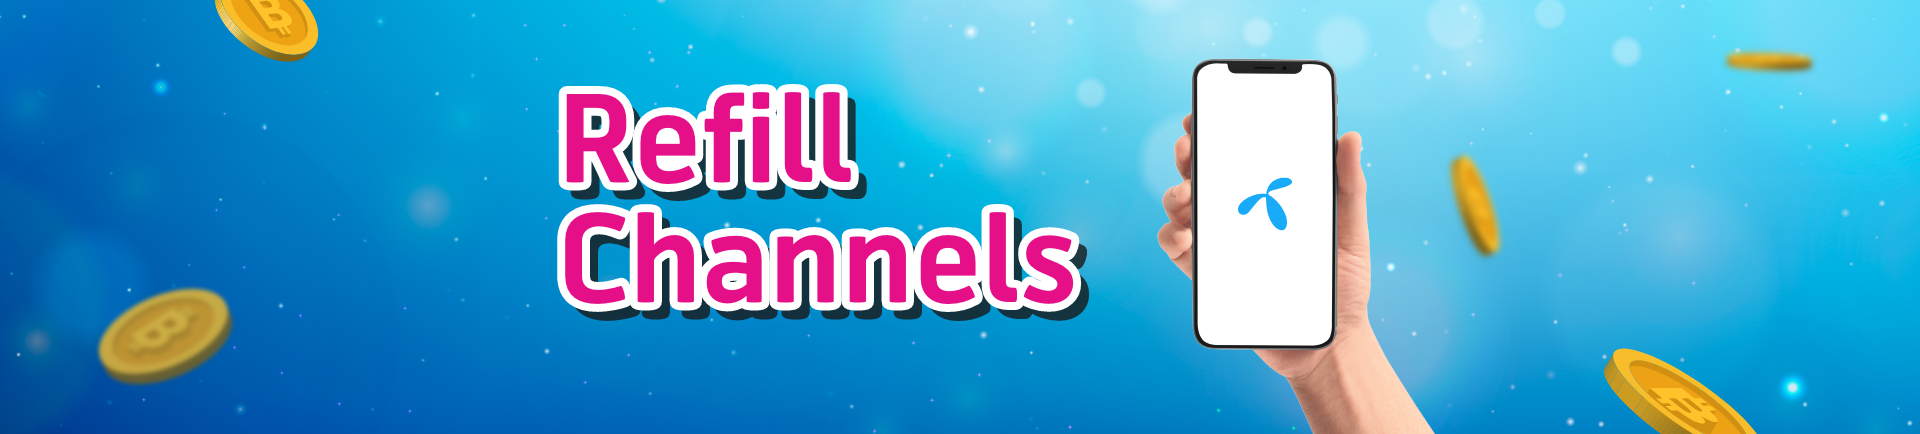 banner refill channel